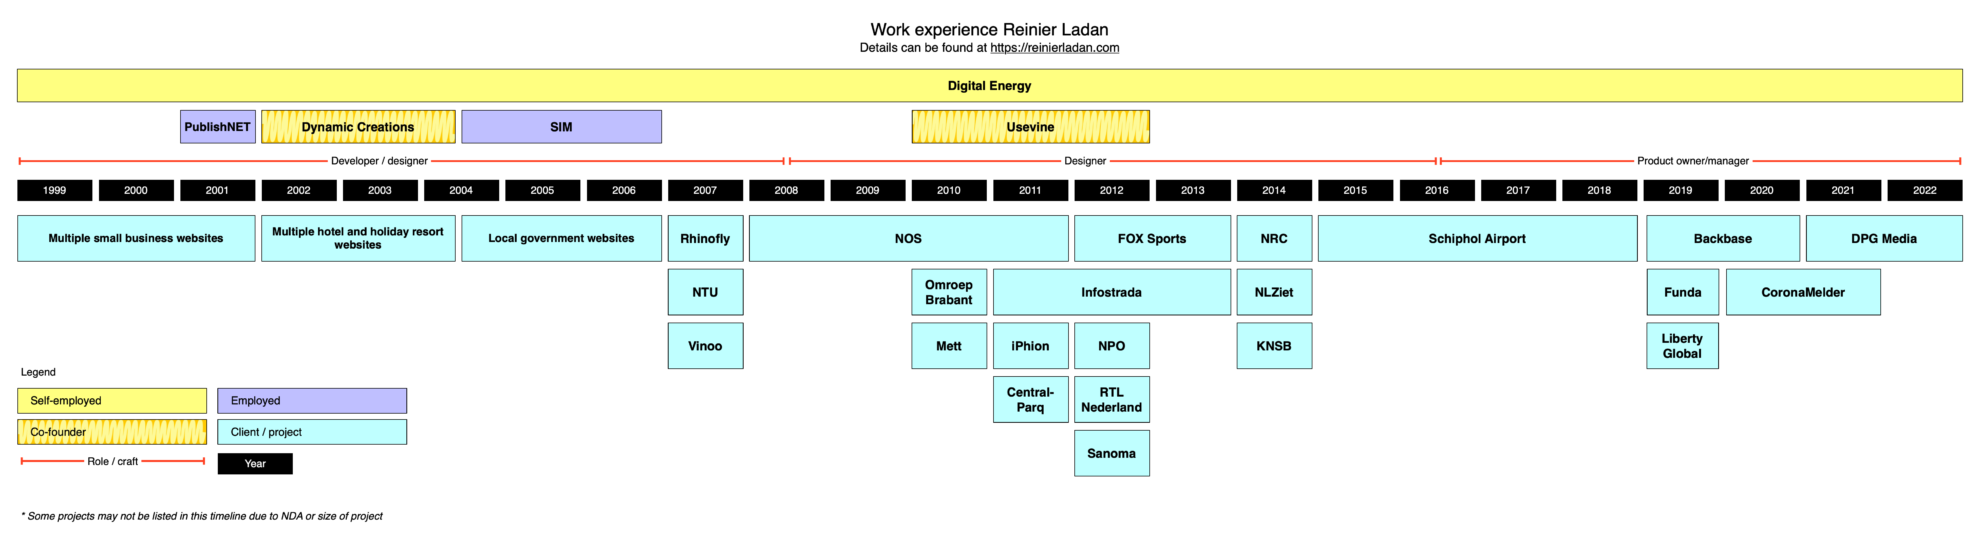 Timeline of Reinier Ladan's work experience